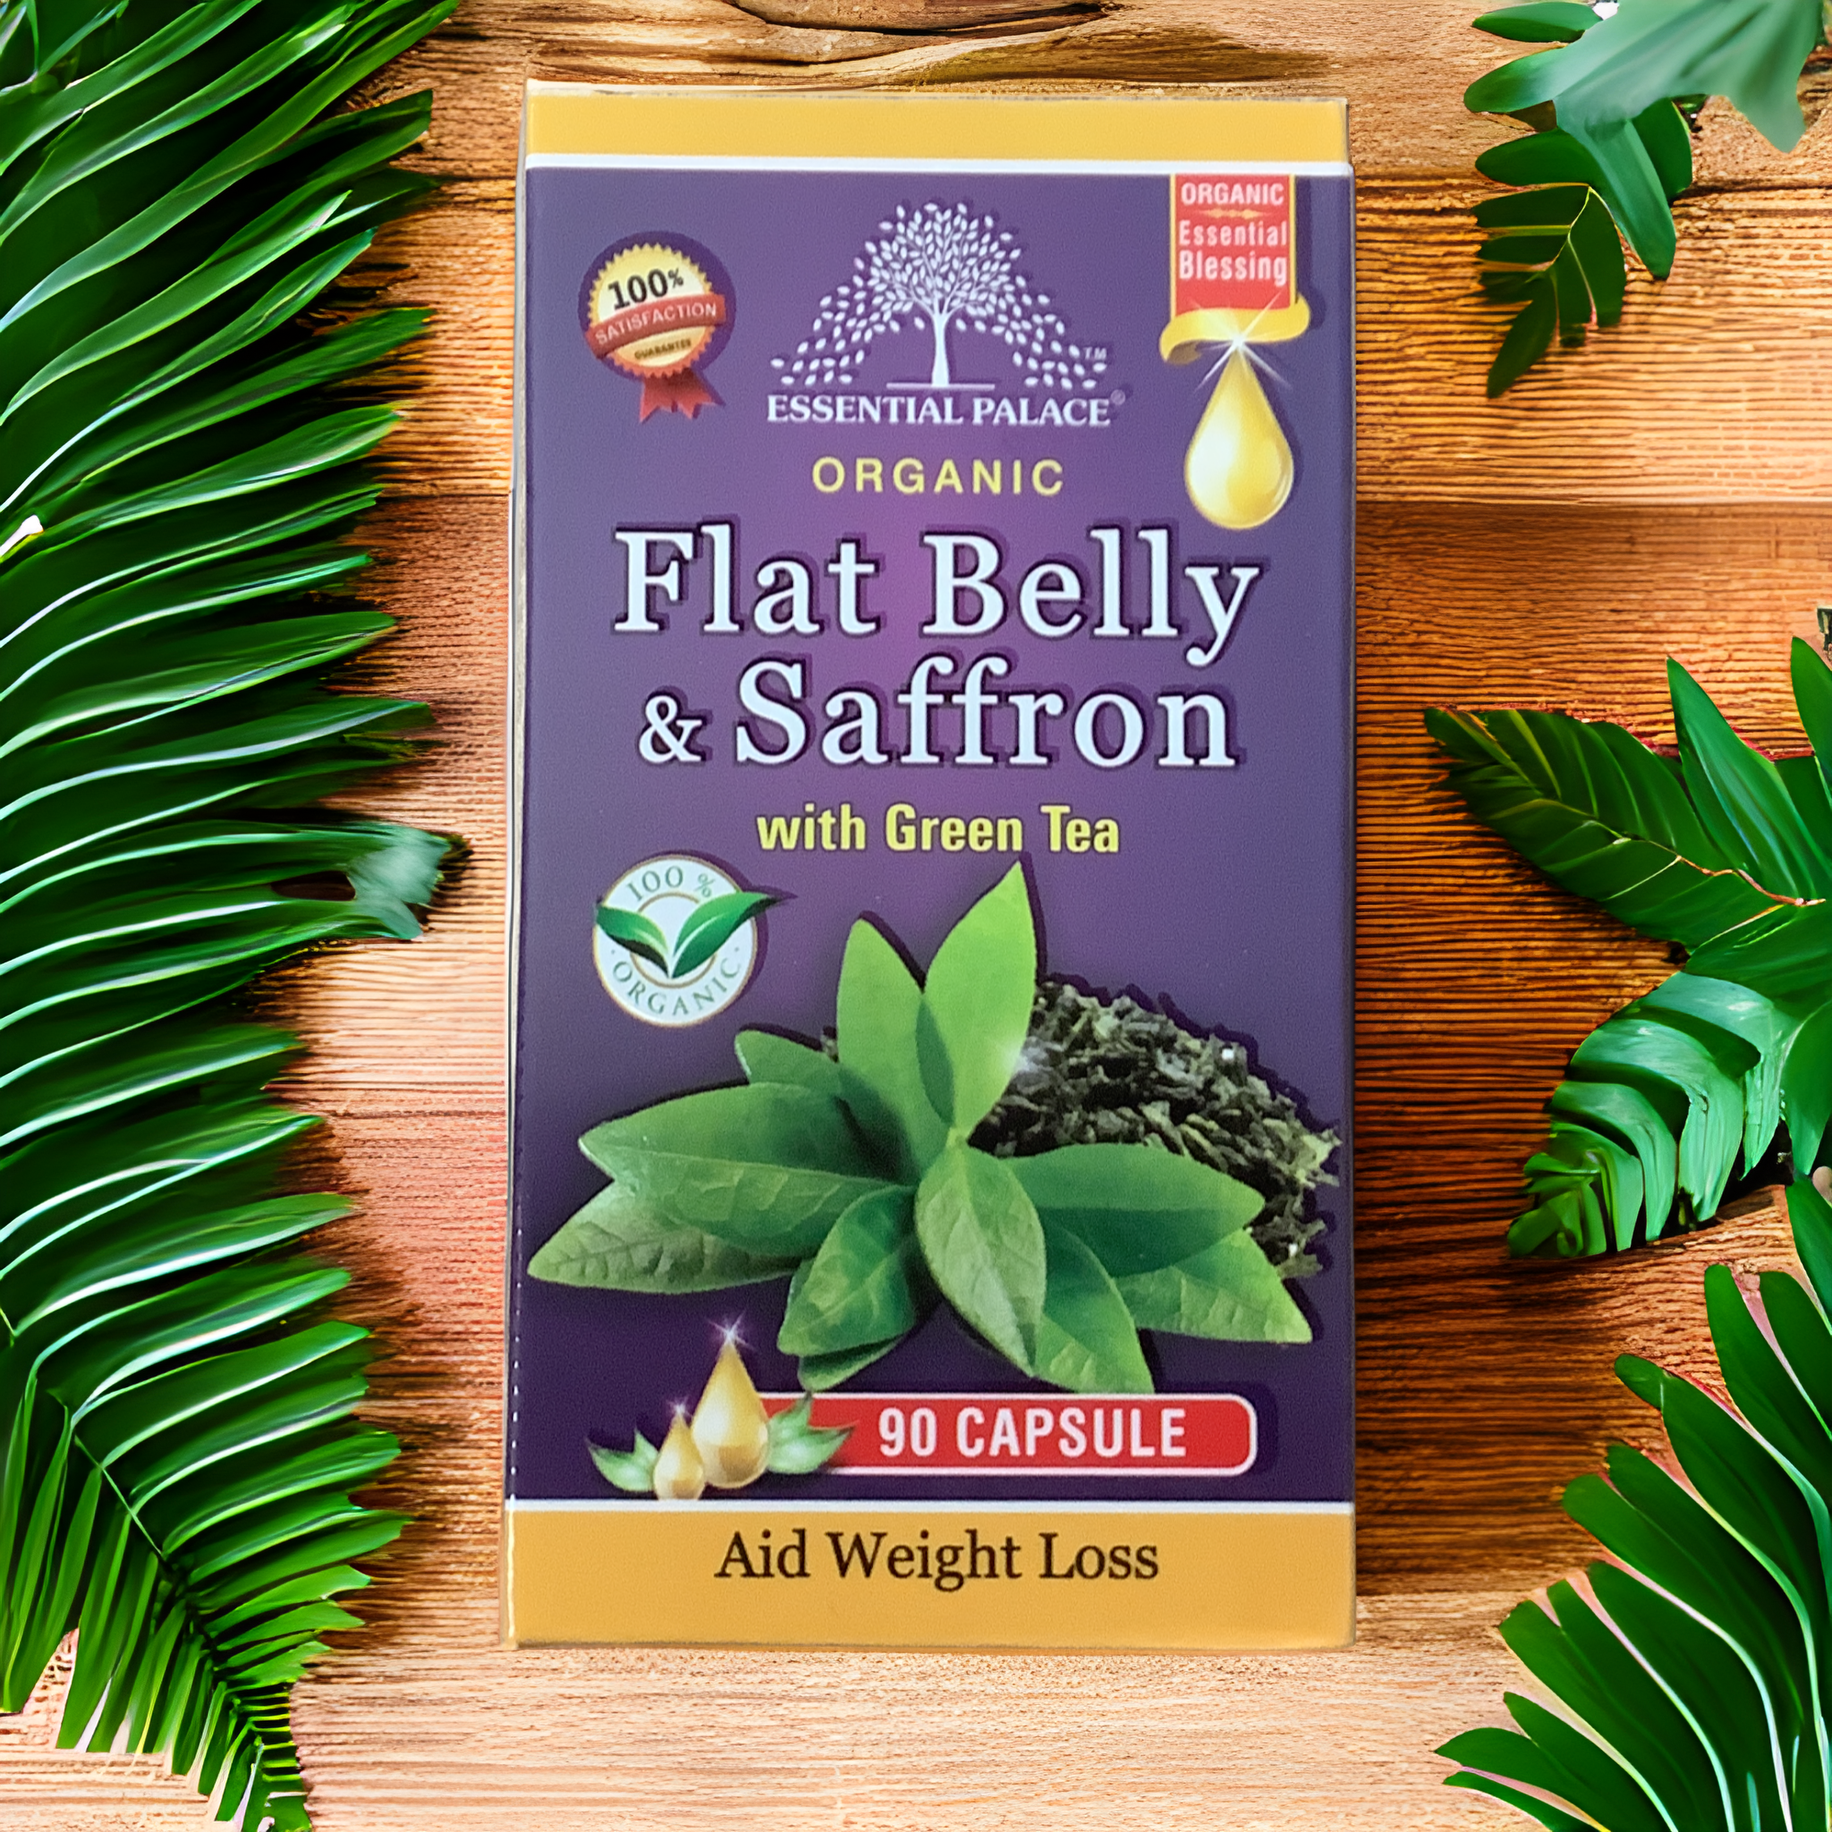 Organic Flat belly & Saffron w/ Green Tea Capsules.